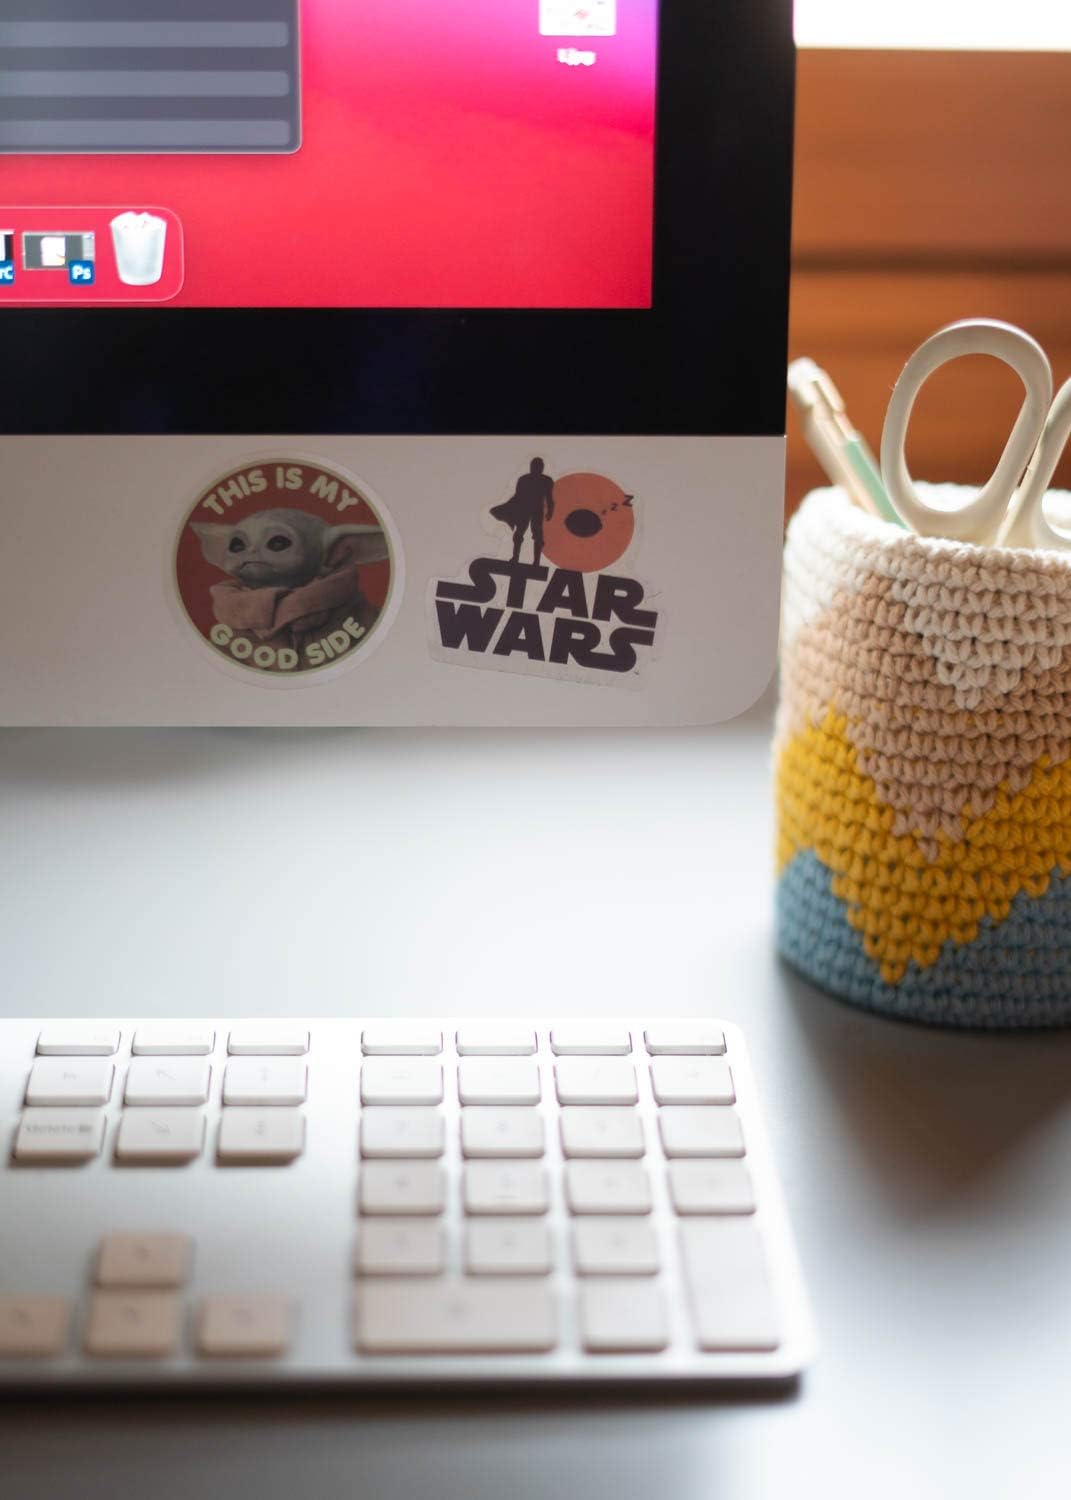 Grupo Erik Star Wars The Mandalorian Gadget Decals - Grogu The Child Baby Yoda Waterproof & Removable Stickers